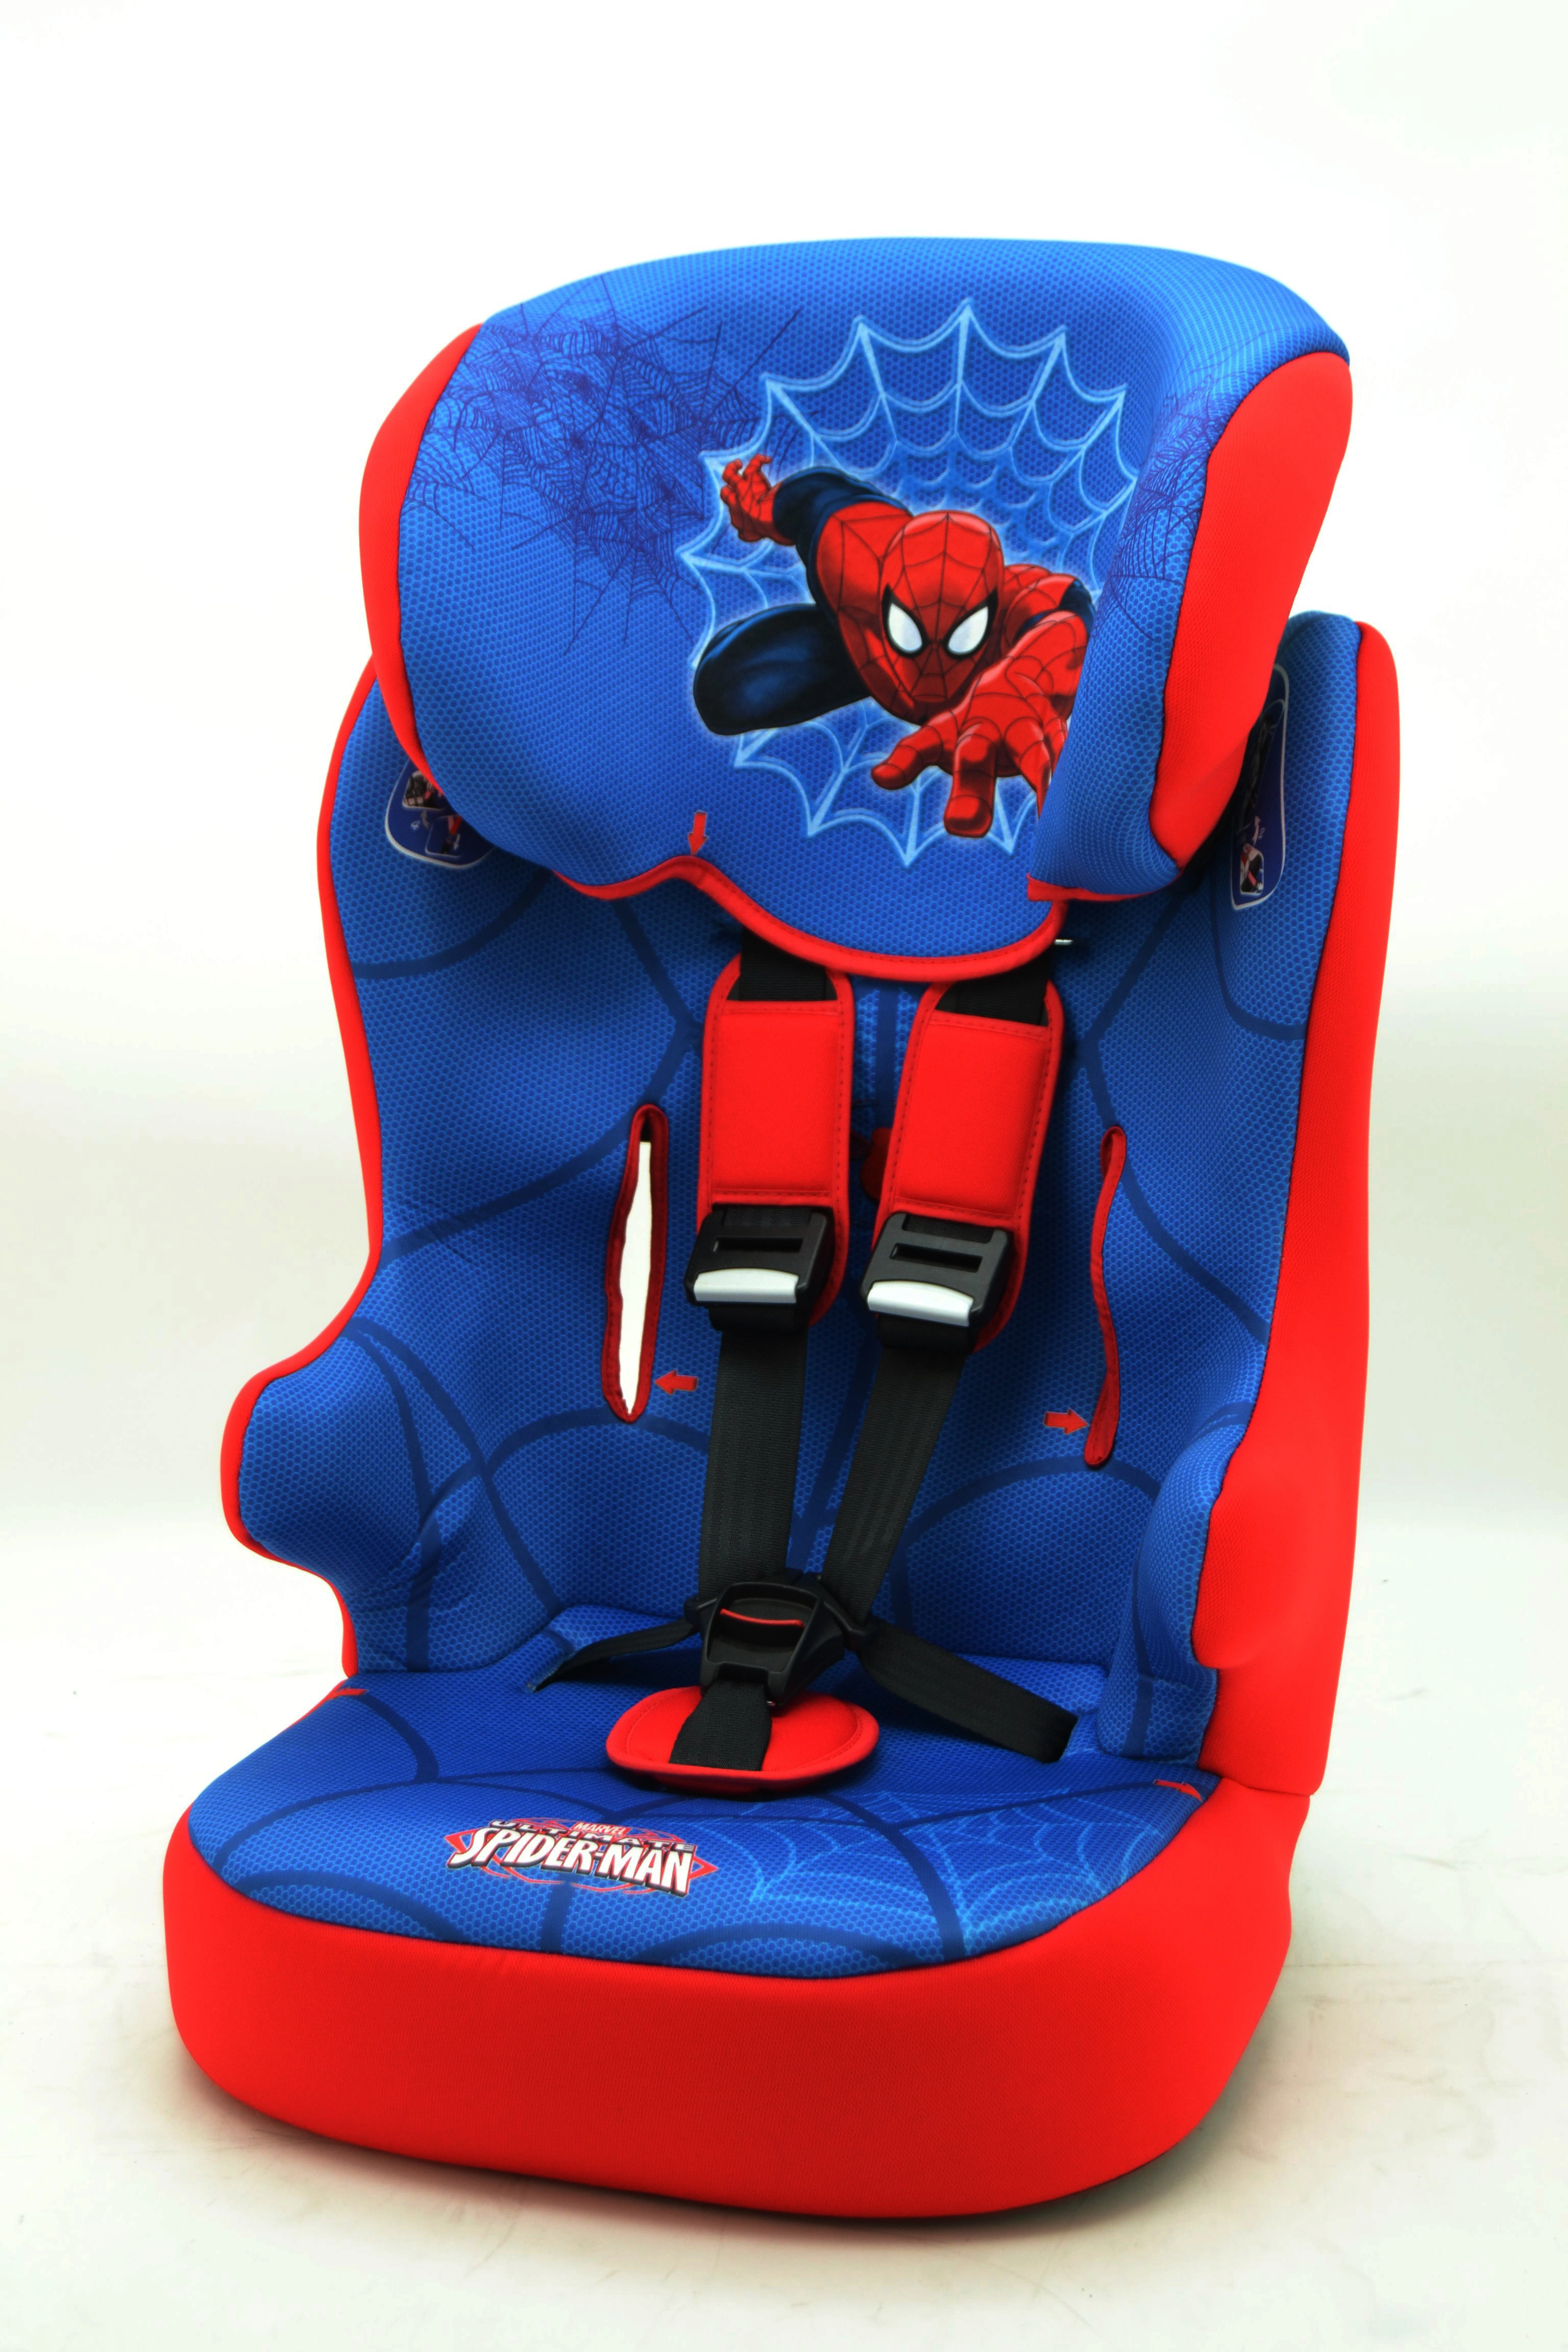 Kindersitz Racer SP Spiderman kaufen bei OBI